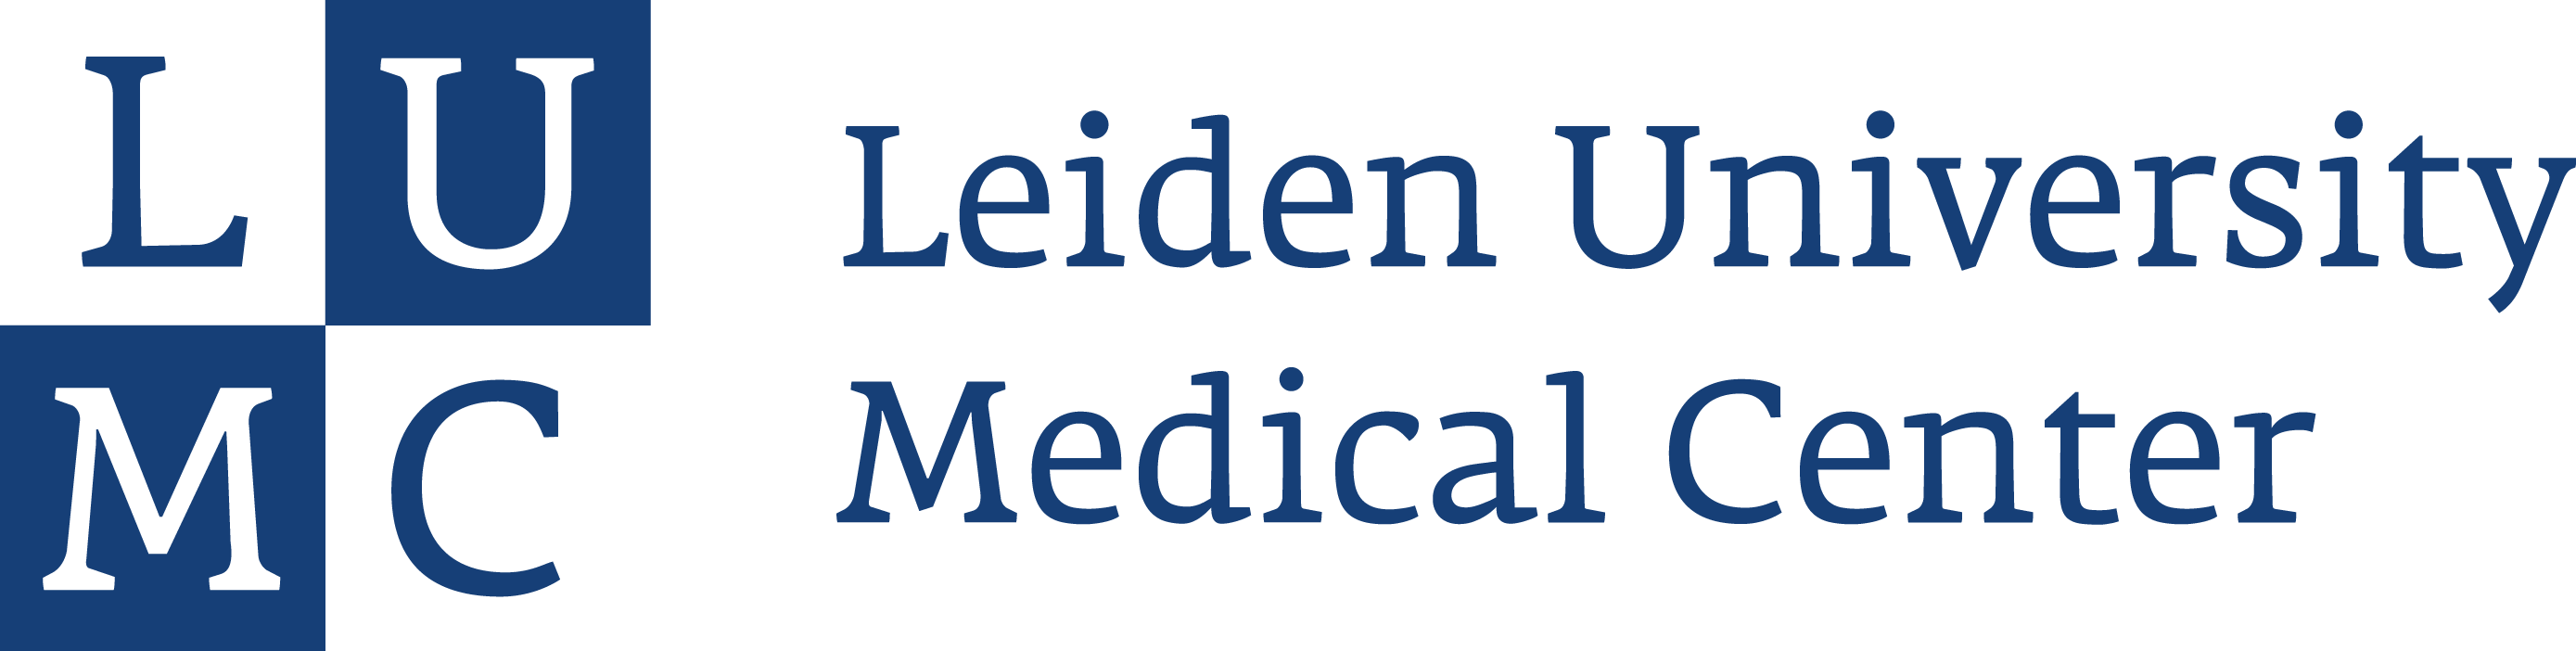 Leiden University Medical Center (LUMC)